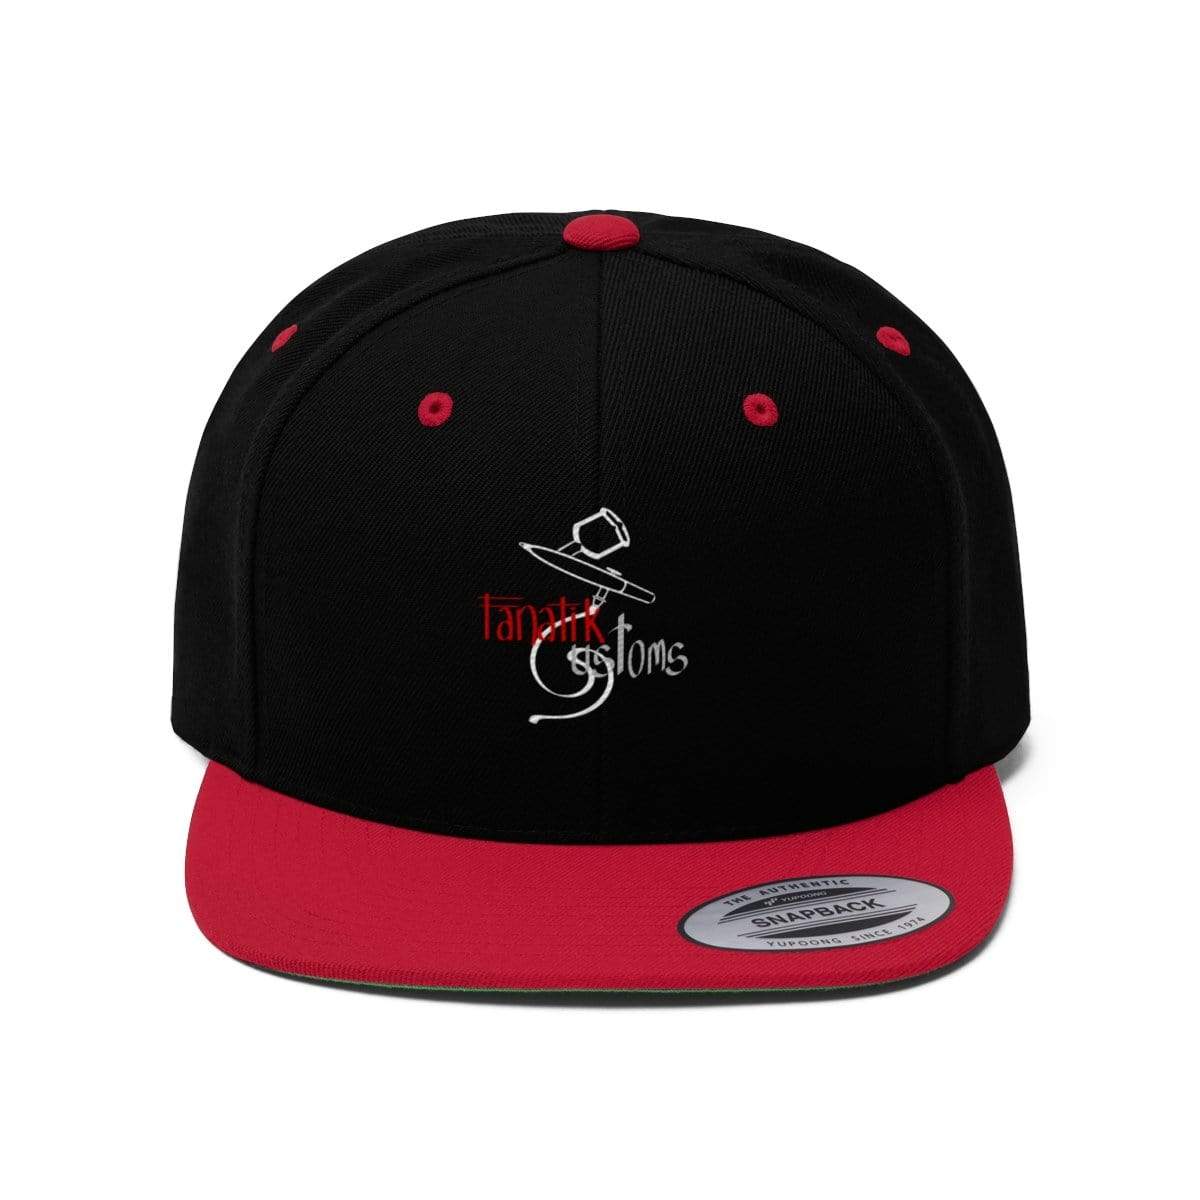 Plumskum Hats Black/True Red / One size Will’s Fanatik Customs Flat Bill Hat